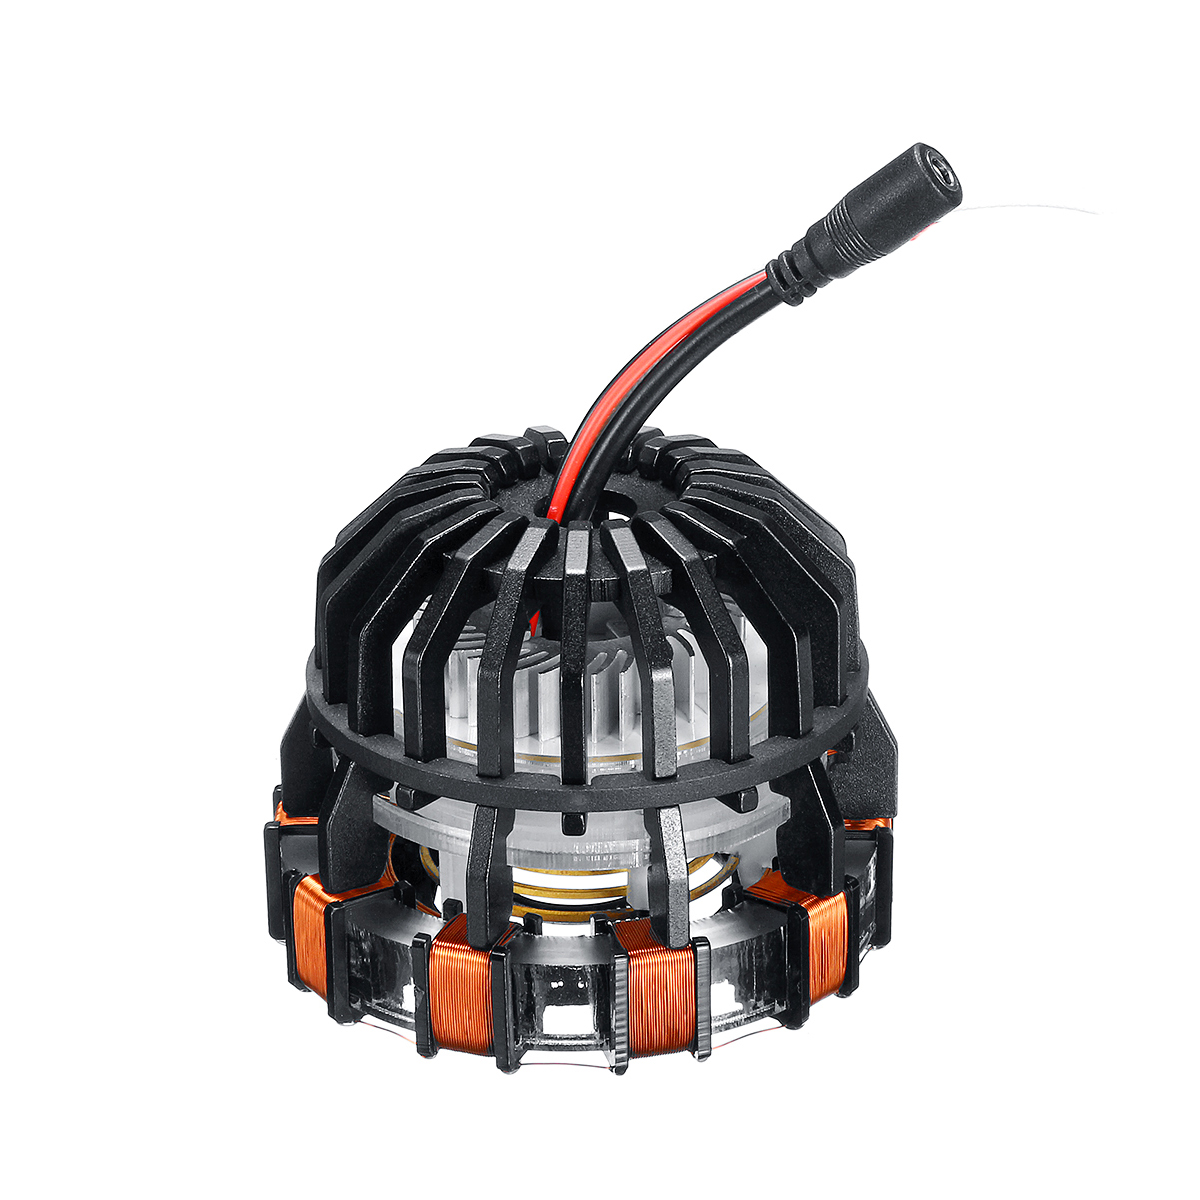 MK1-Aluminum-Alloy-Remote-Ver-Tony-11-Arc-Reactor-DIY-Model-Kit-LED-Chest-Lamp-Remote-Control-Scienc-1477130-5